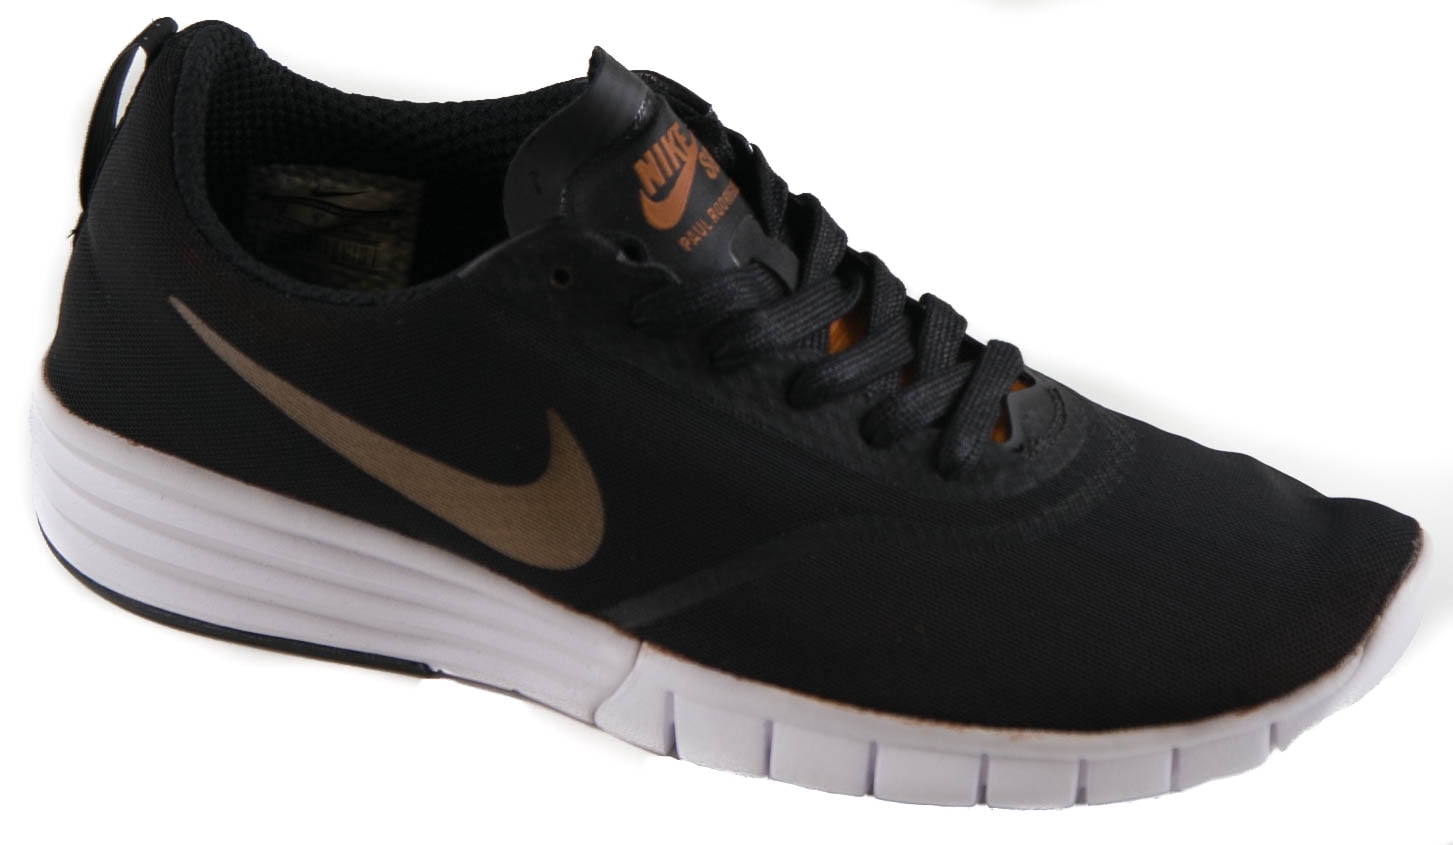 Nike SB Lunar Rodriguez 9 Skateboarding Shoes - Walmart.com